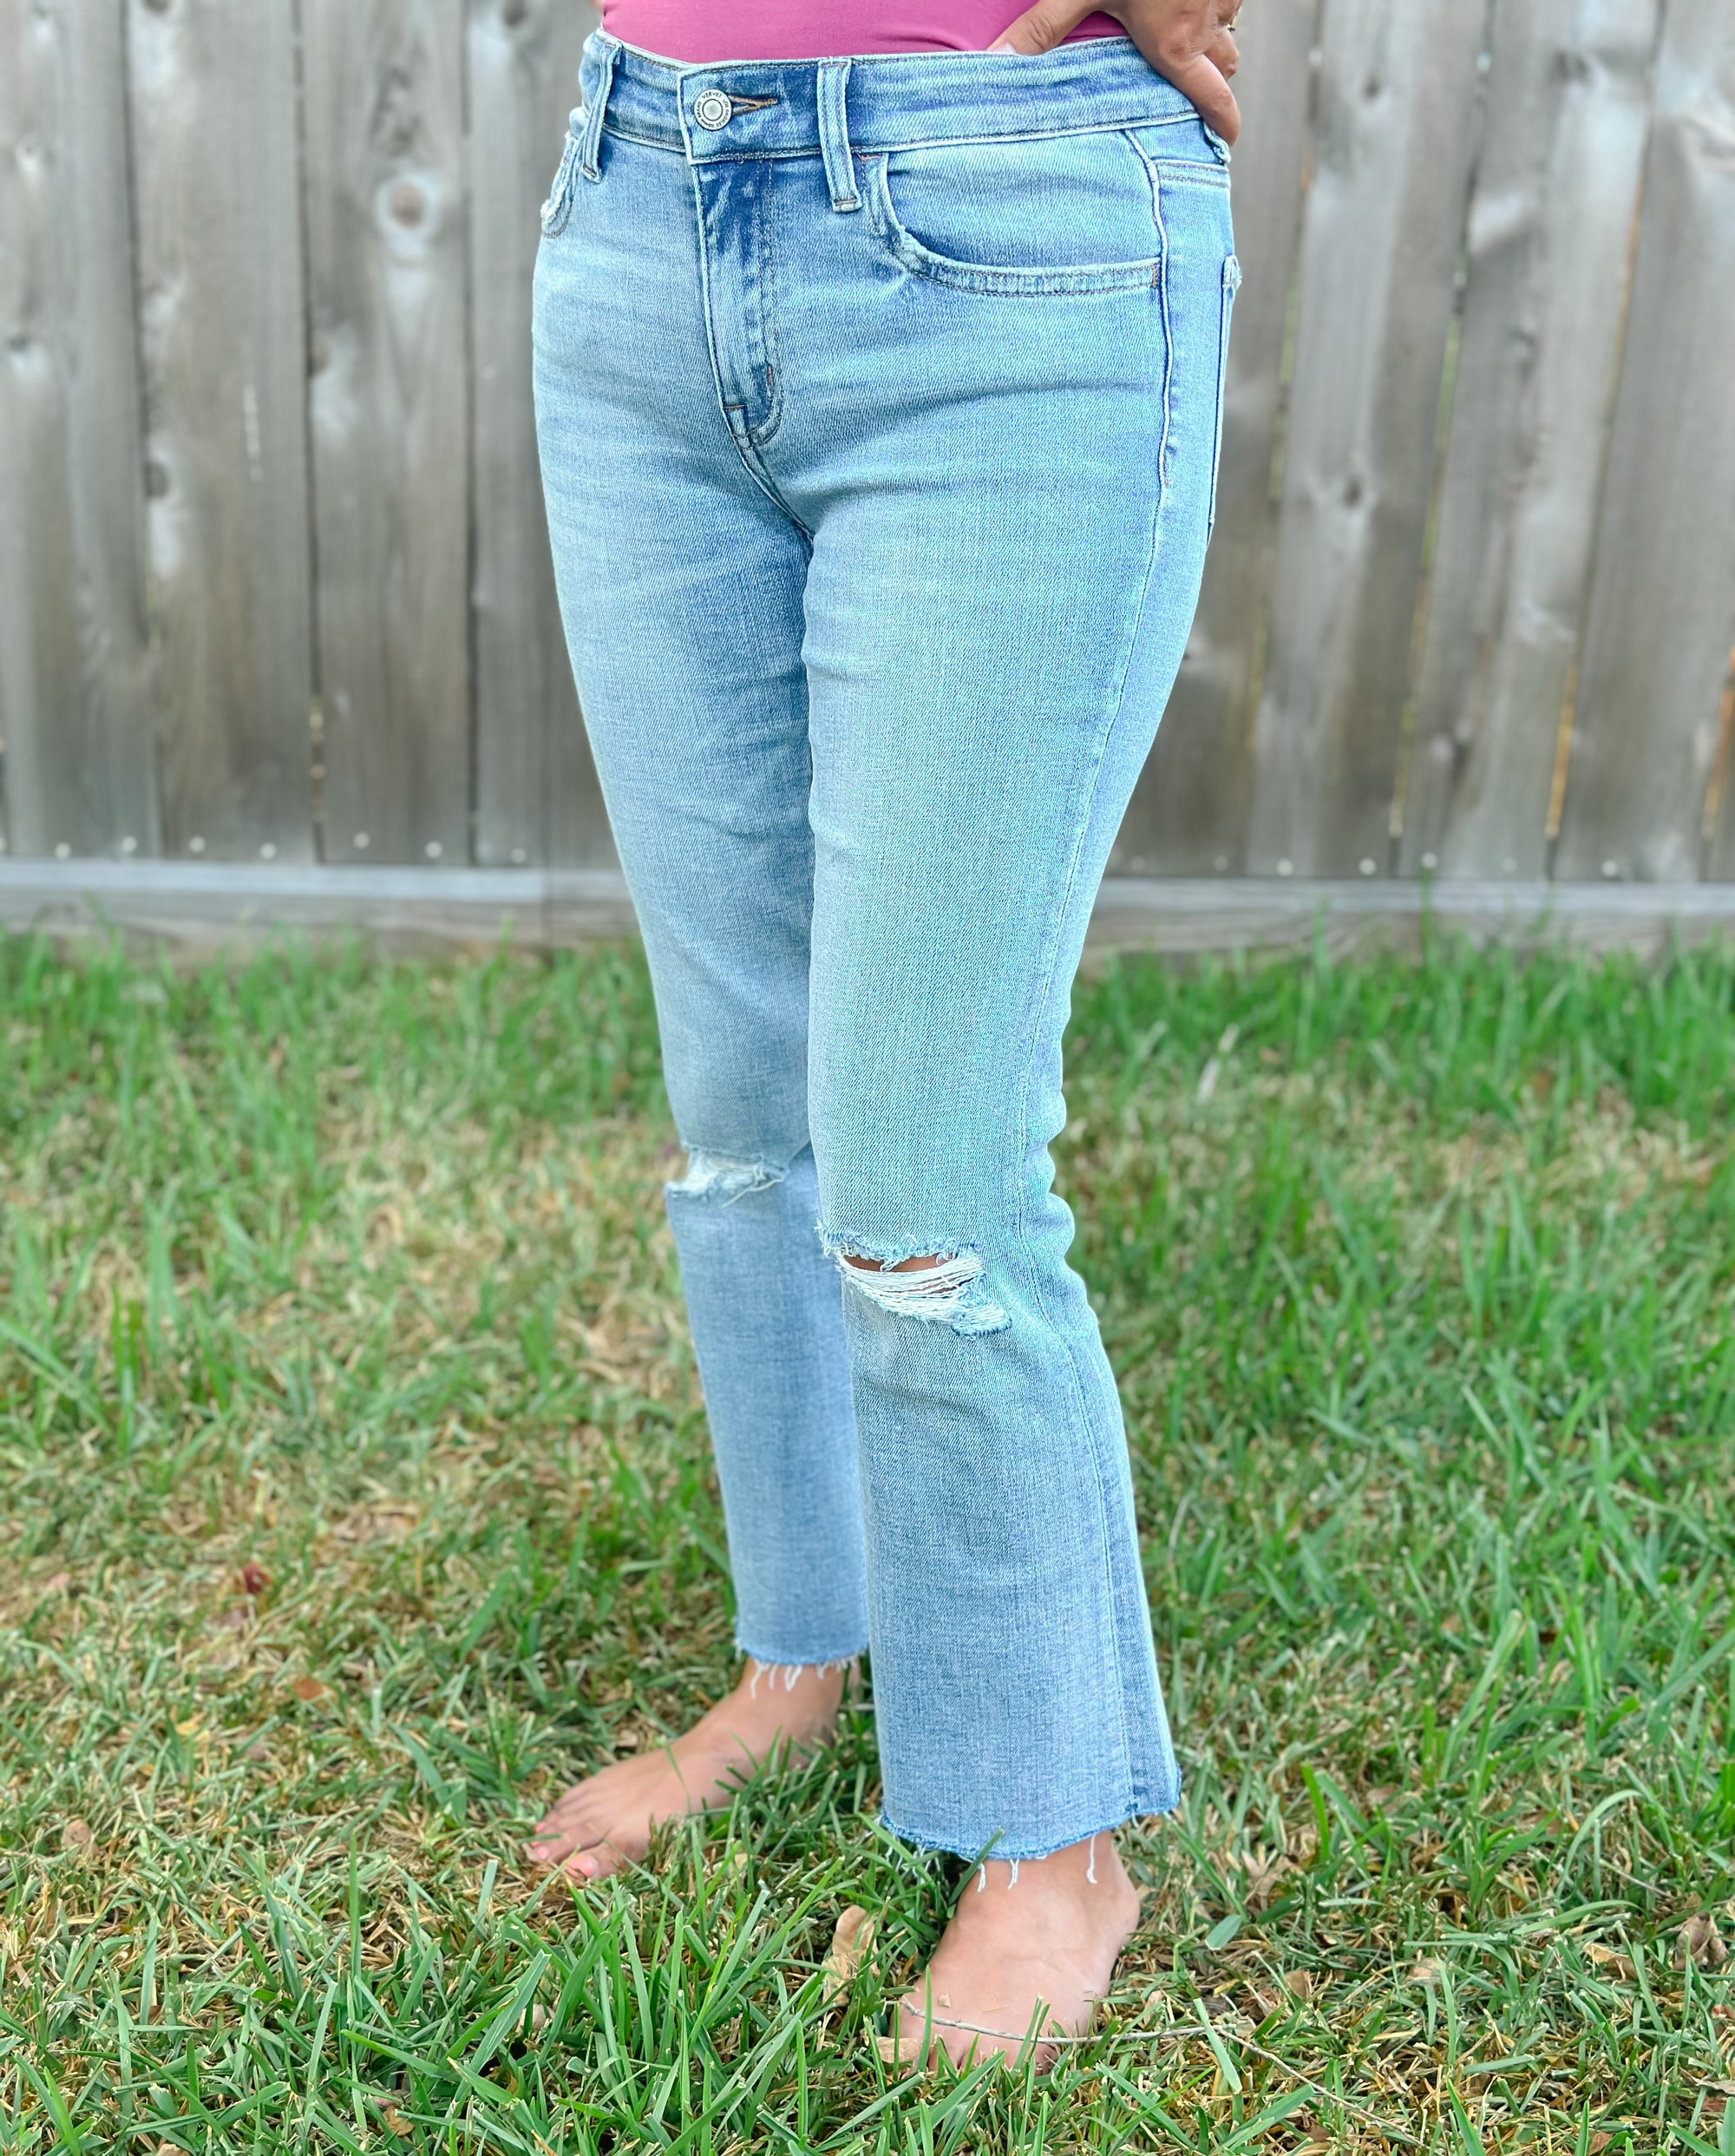 The Ververt Allison Mid Rise Kick Flare Jeans